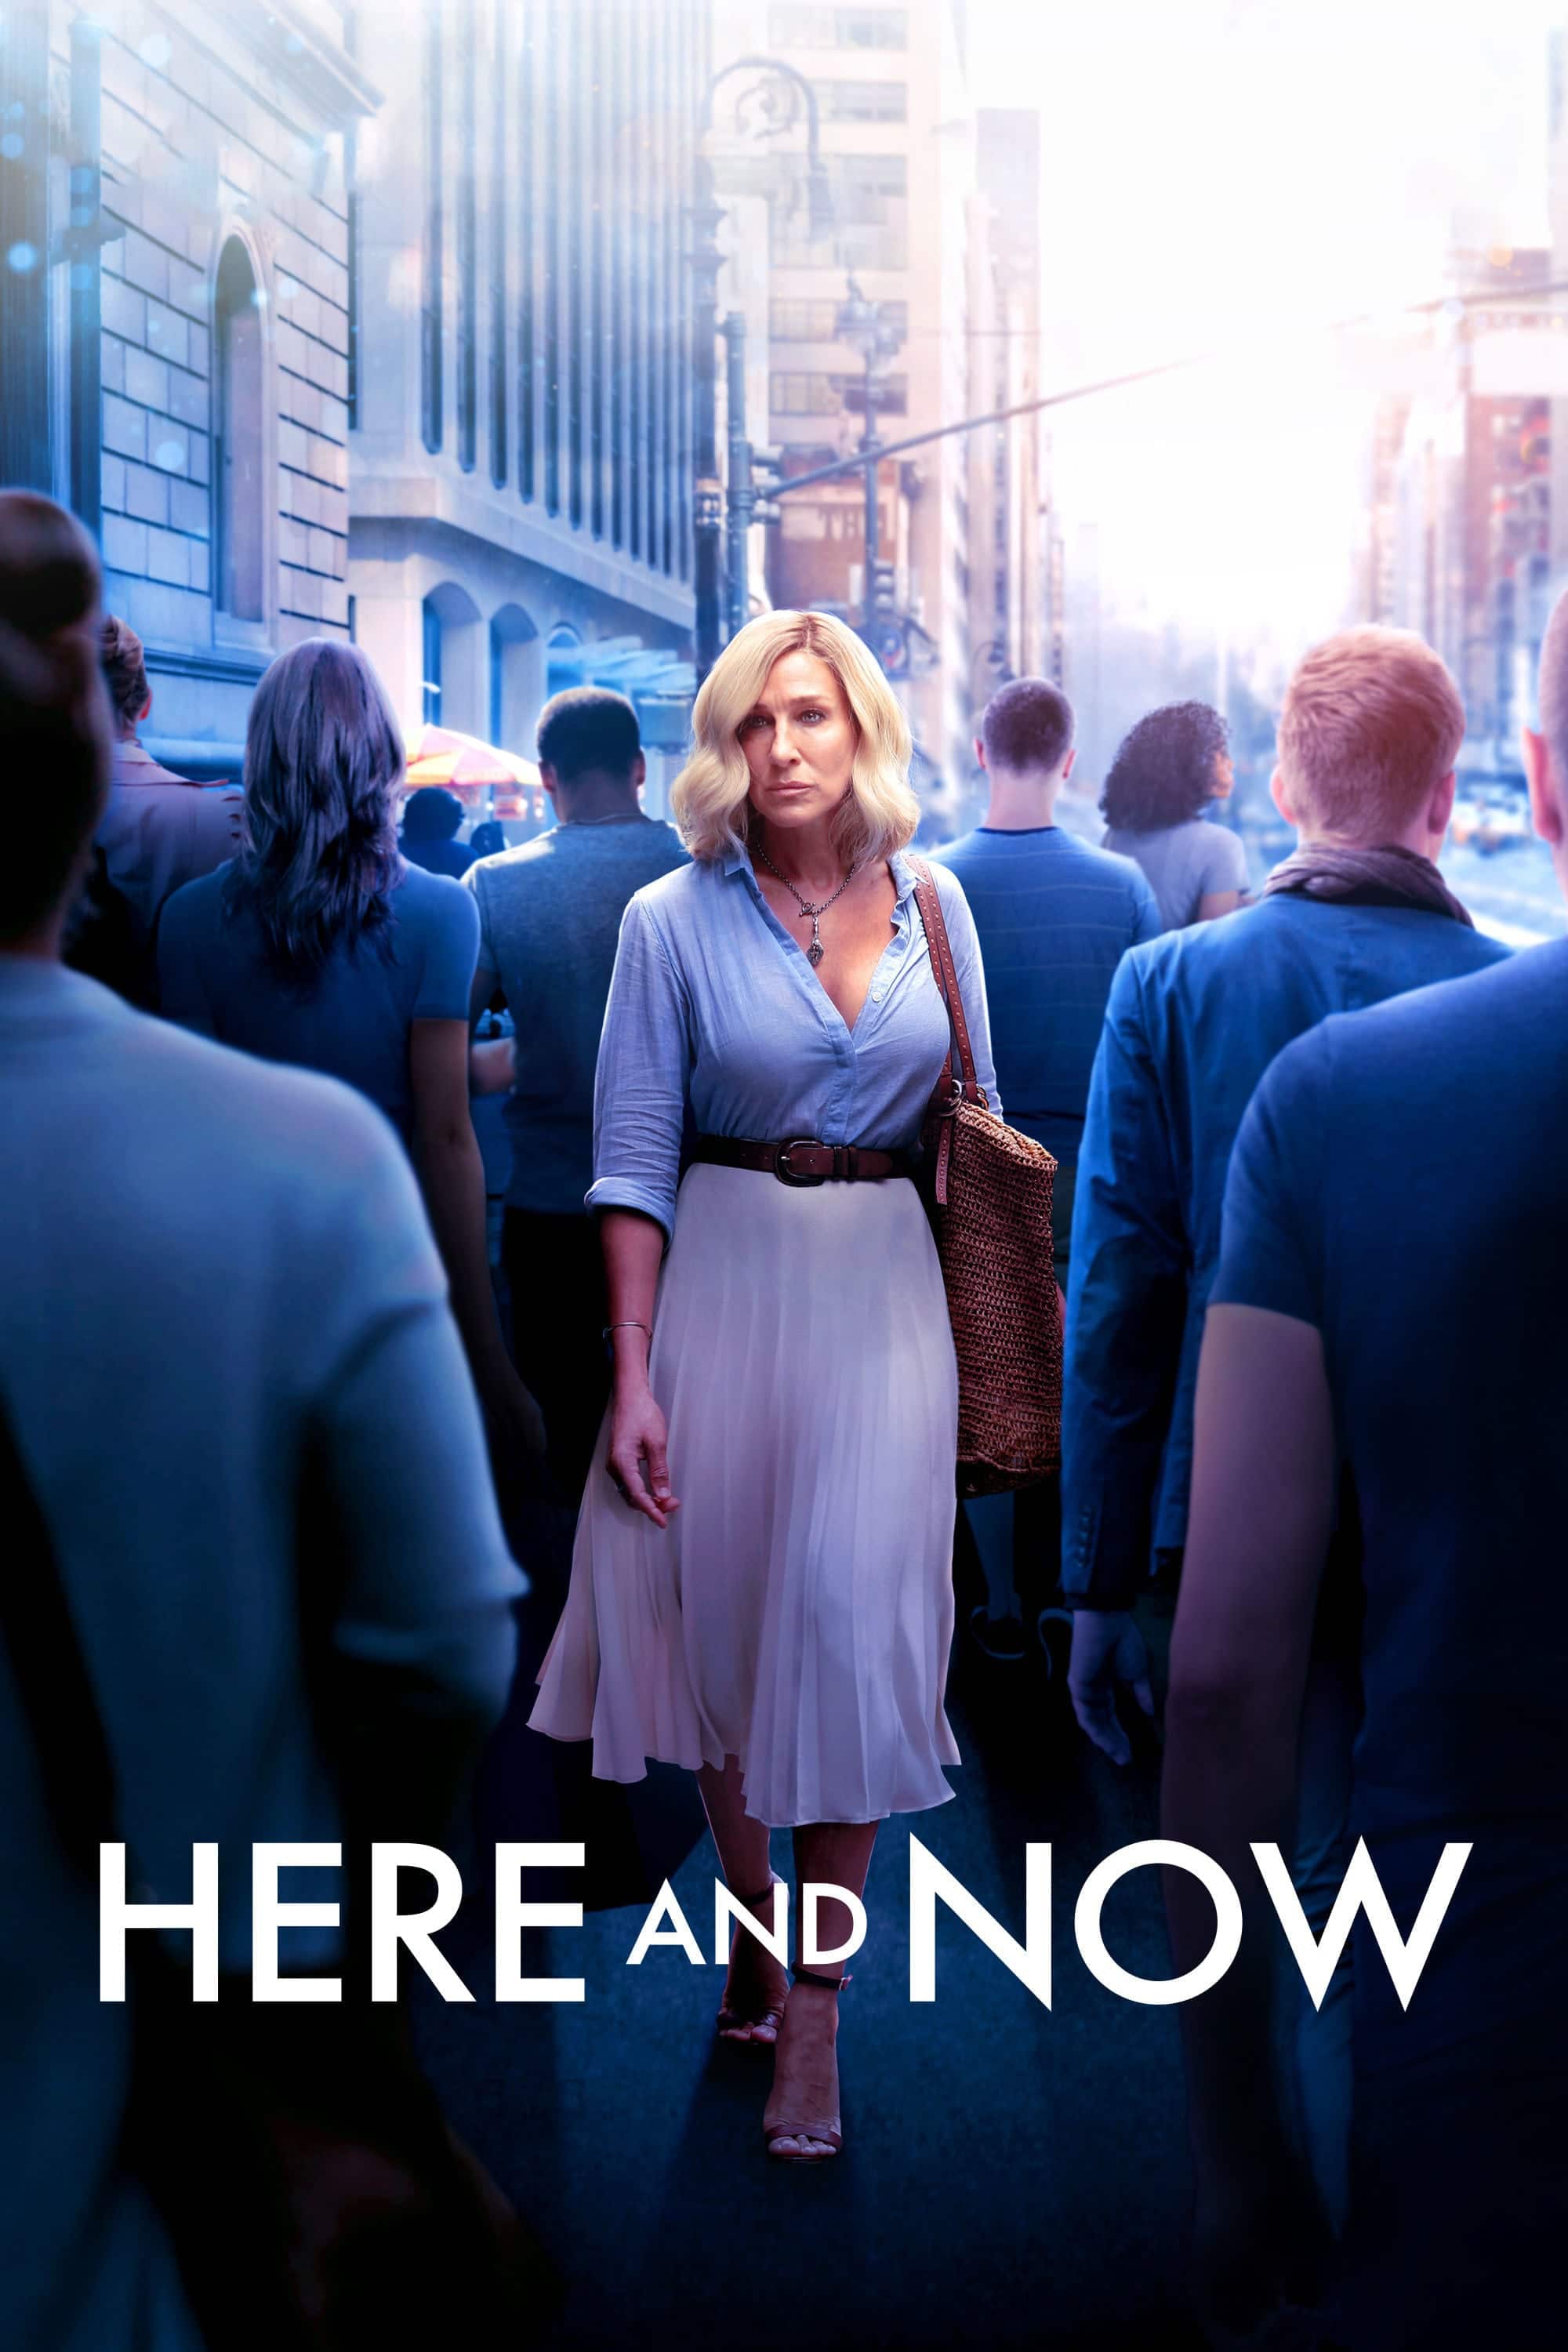 Plakat von "Here and Now"